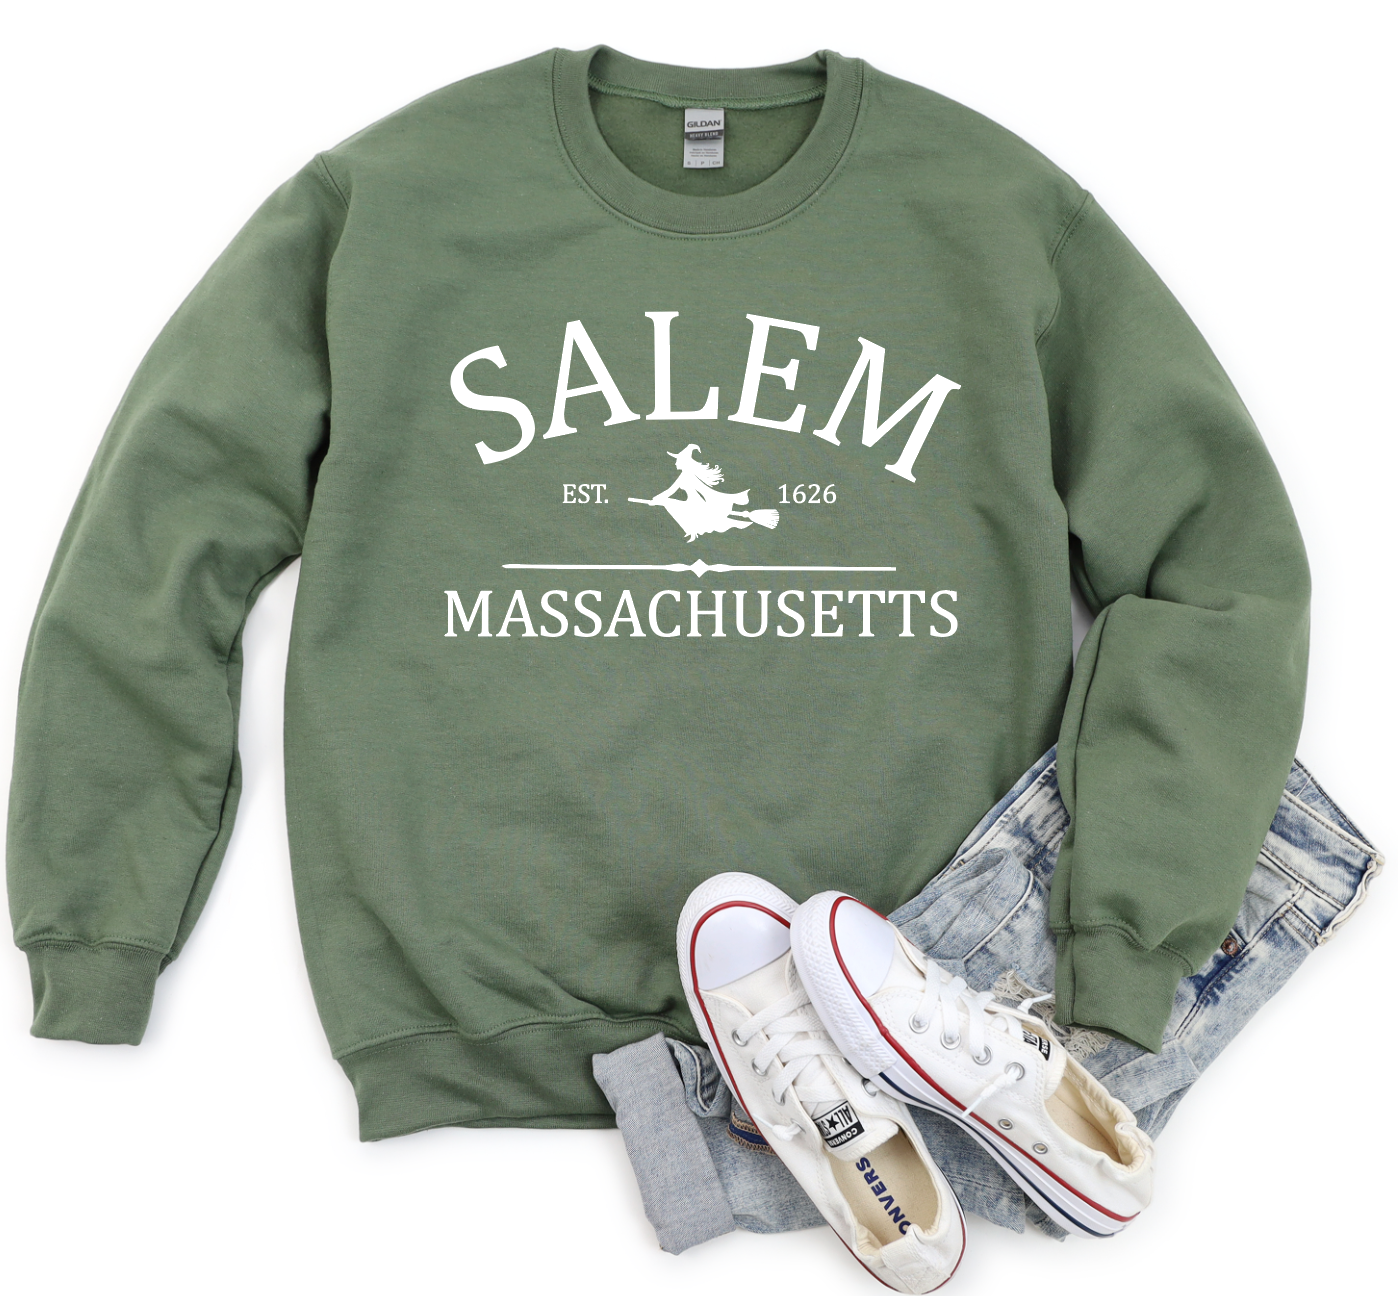 Salem Sweatshirt Preorder